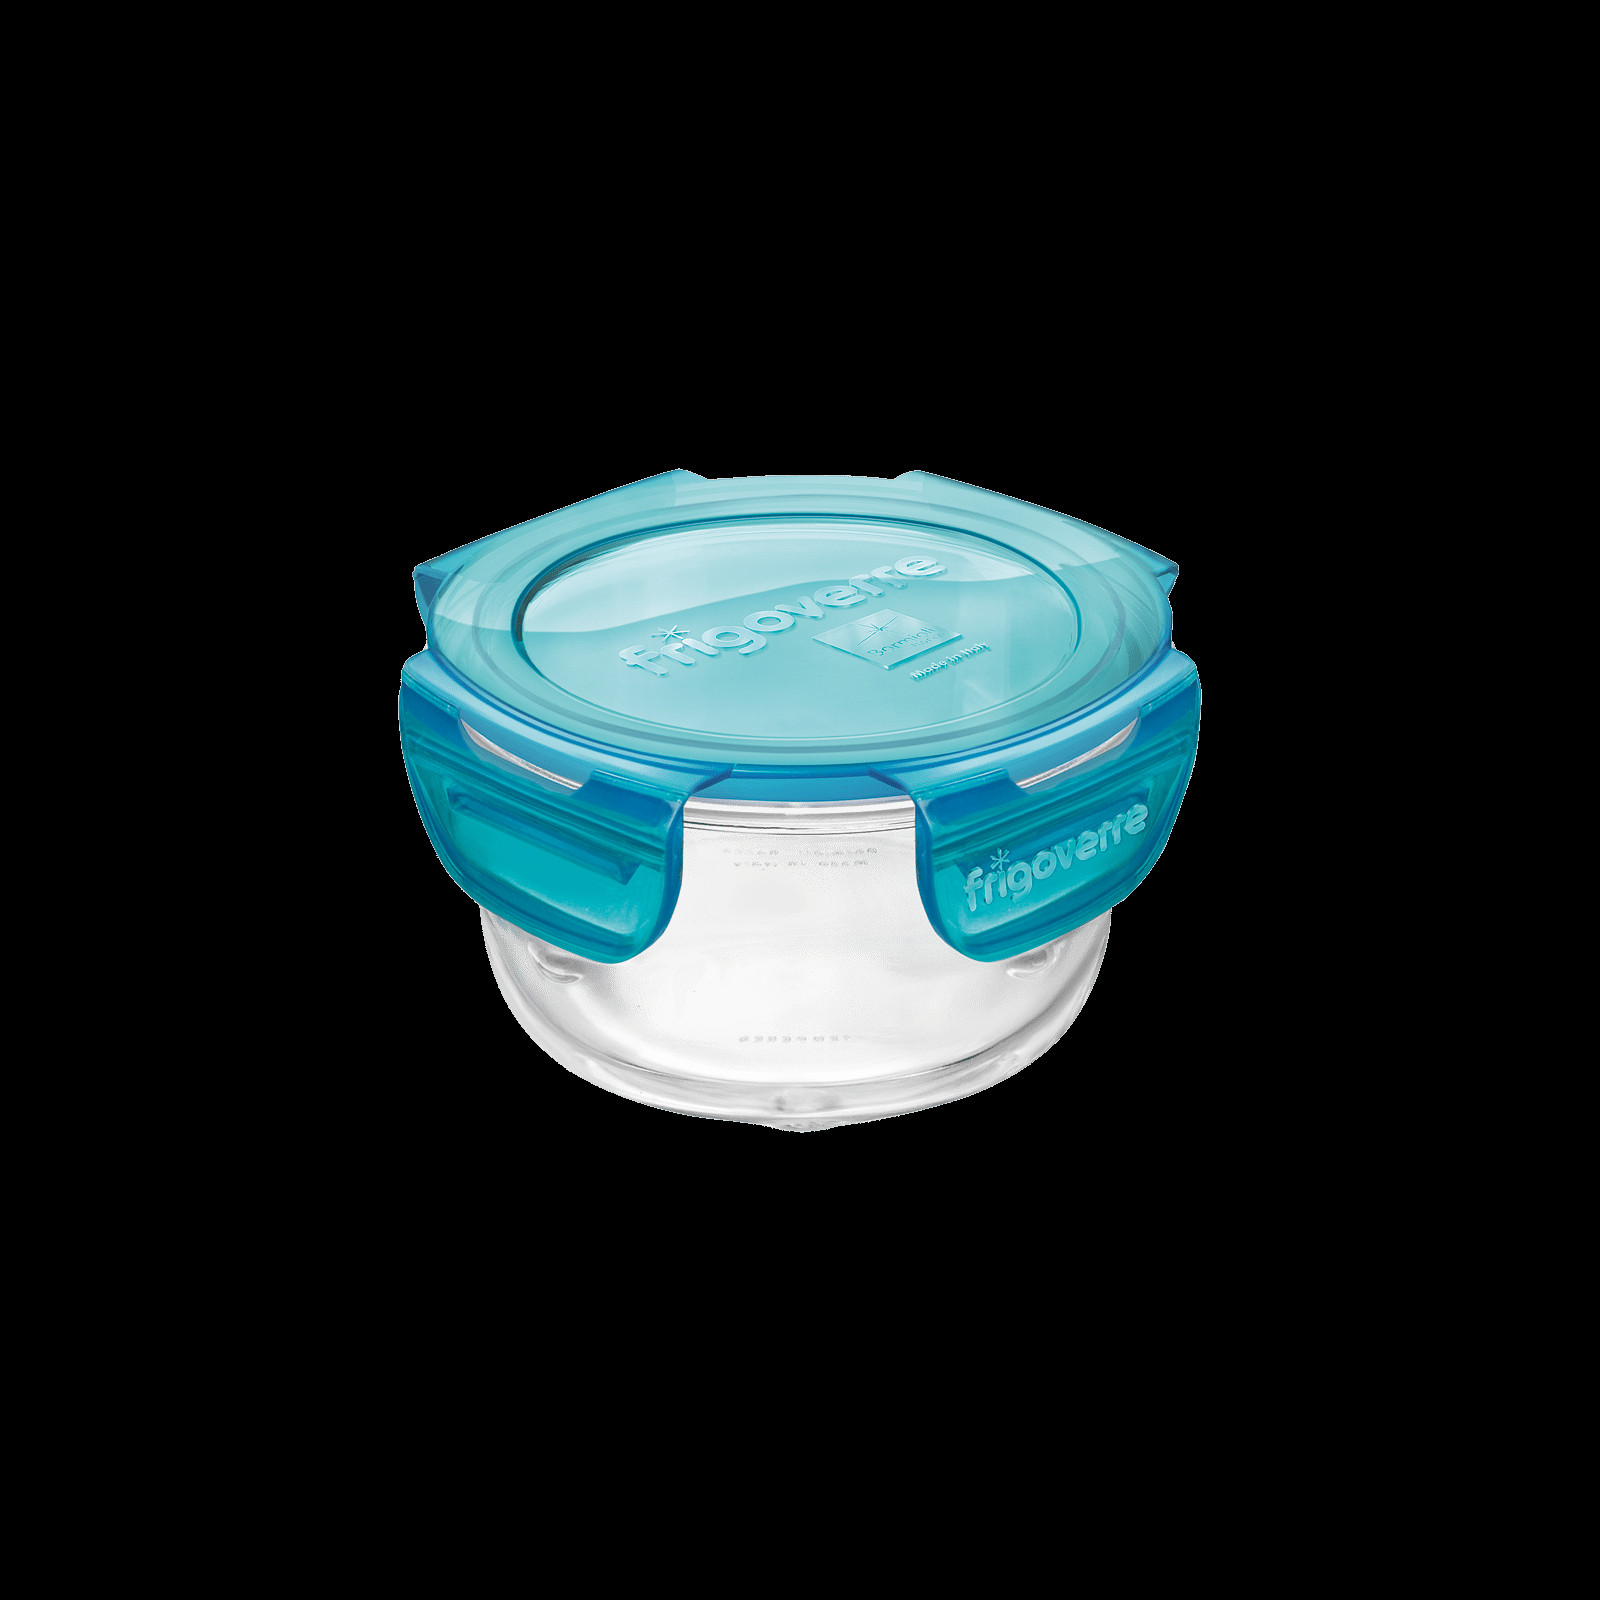 blue mason jar vase of archivi products bormioli rocco throughout round container 4″ frigoverre evolution